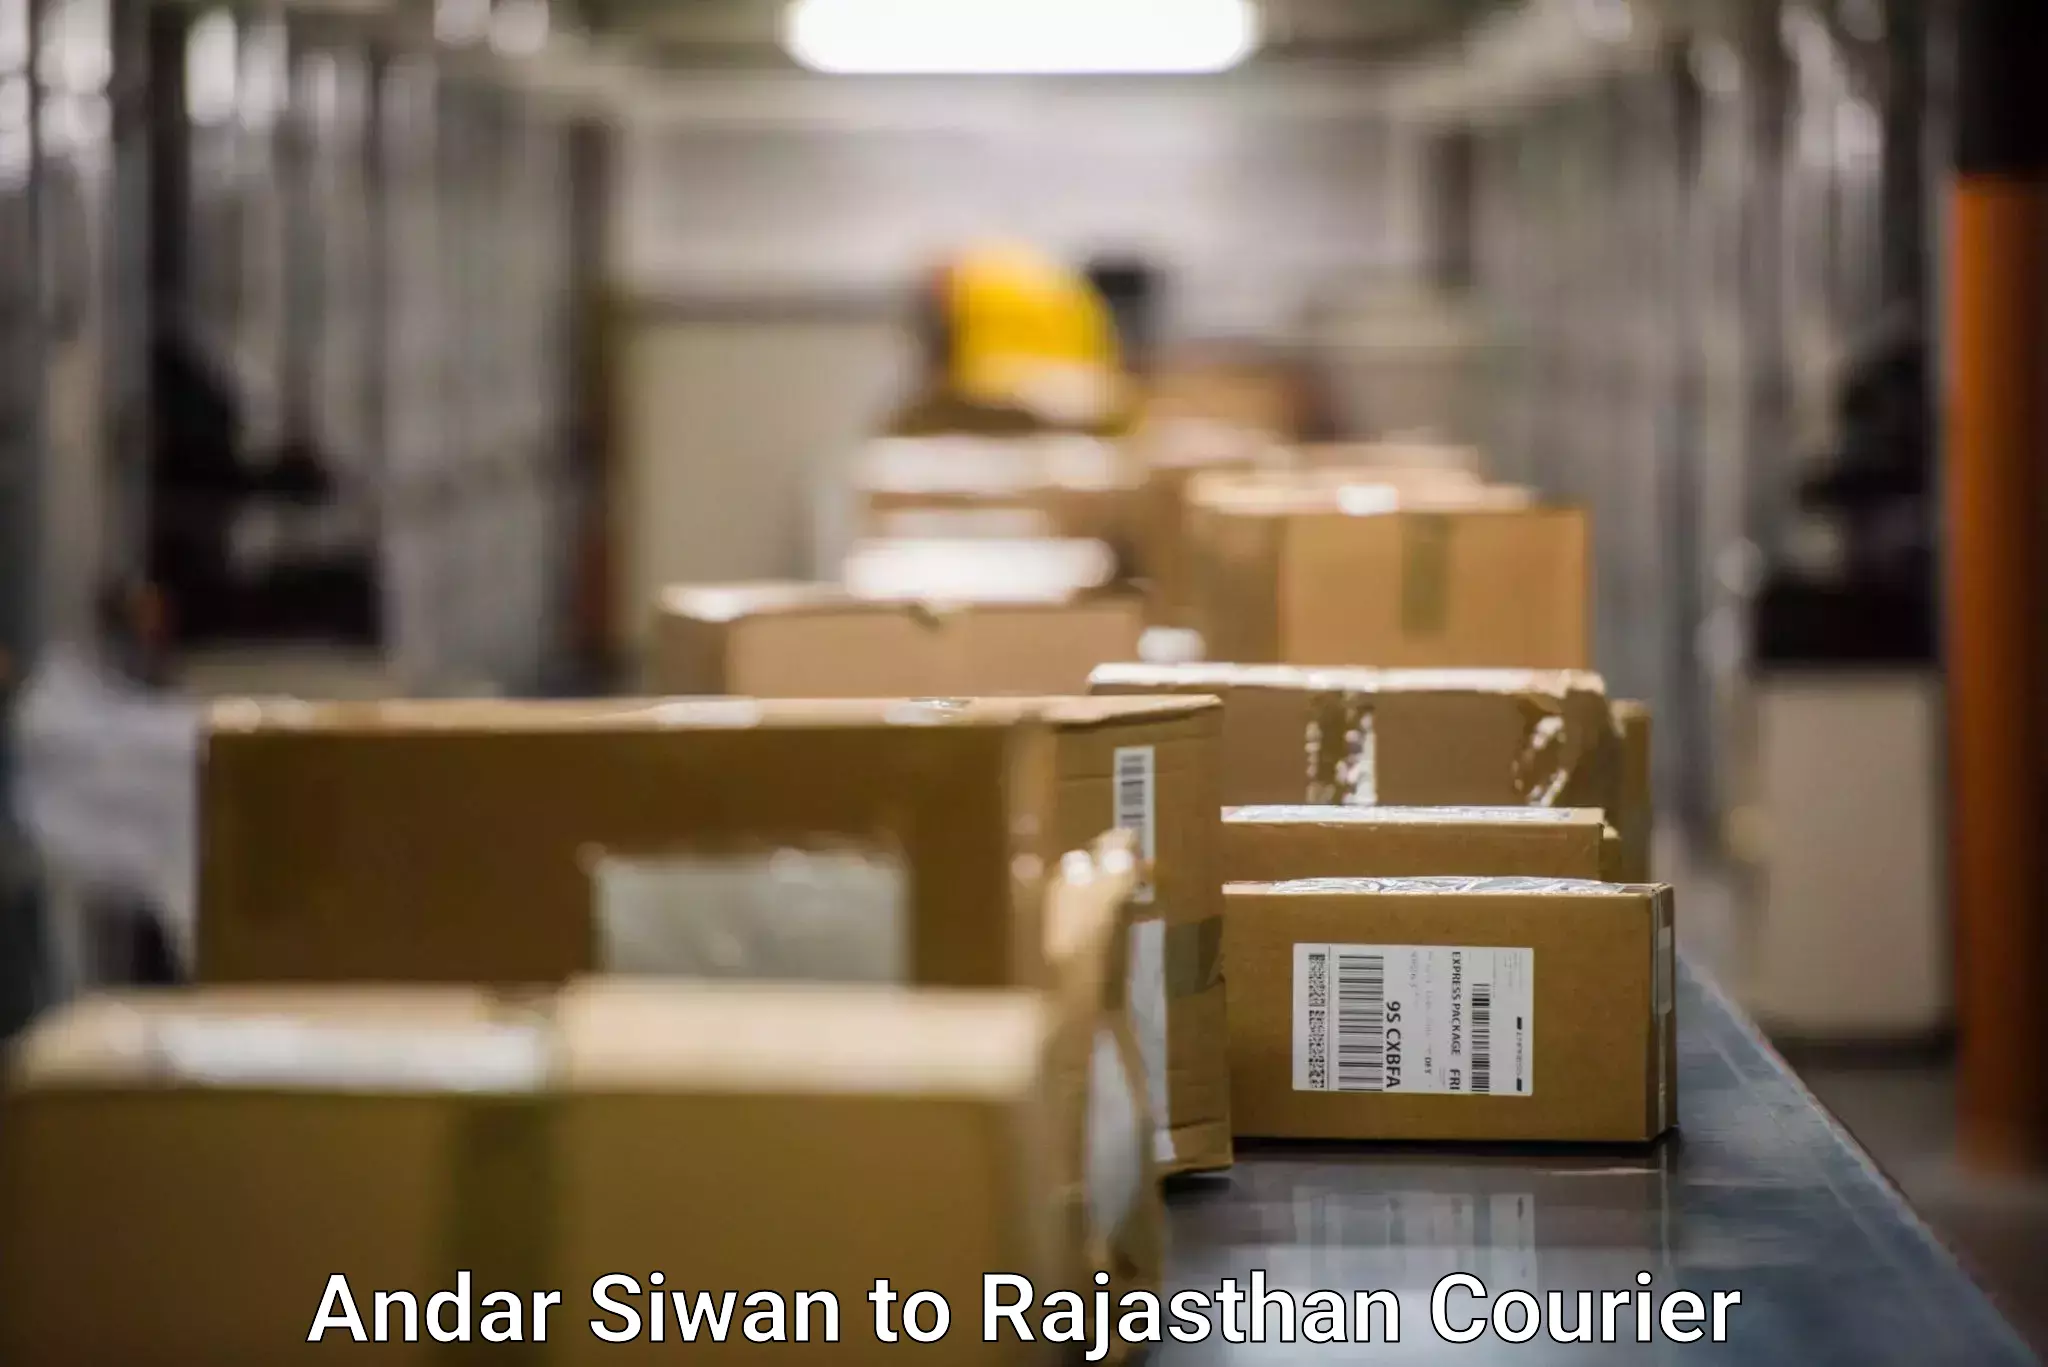 Customizable shipping options Andar Siwan to Jaipur